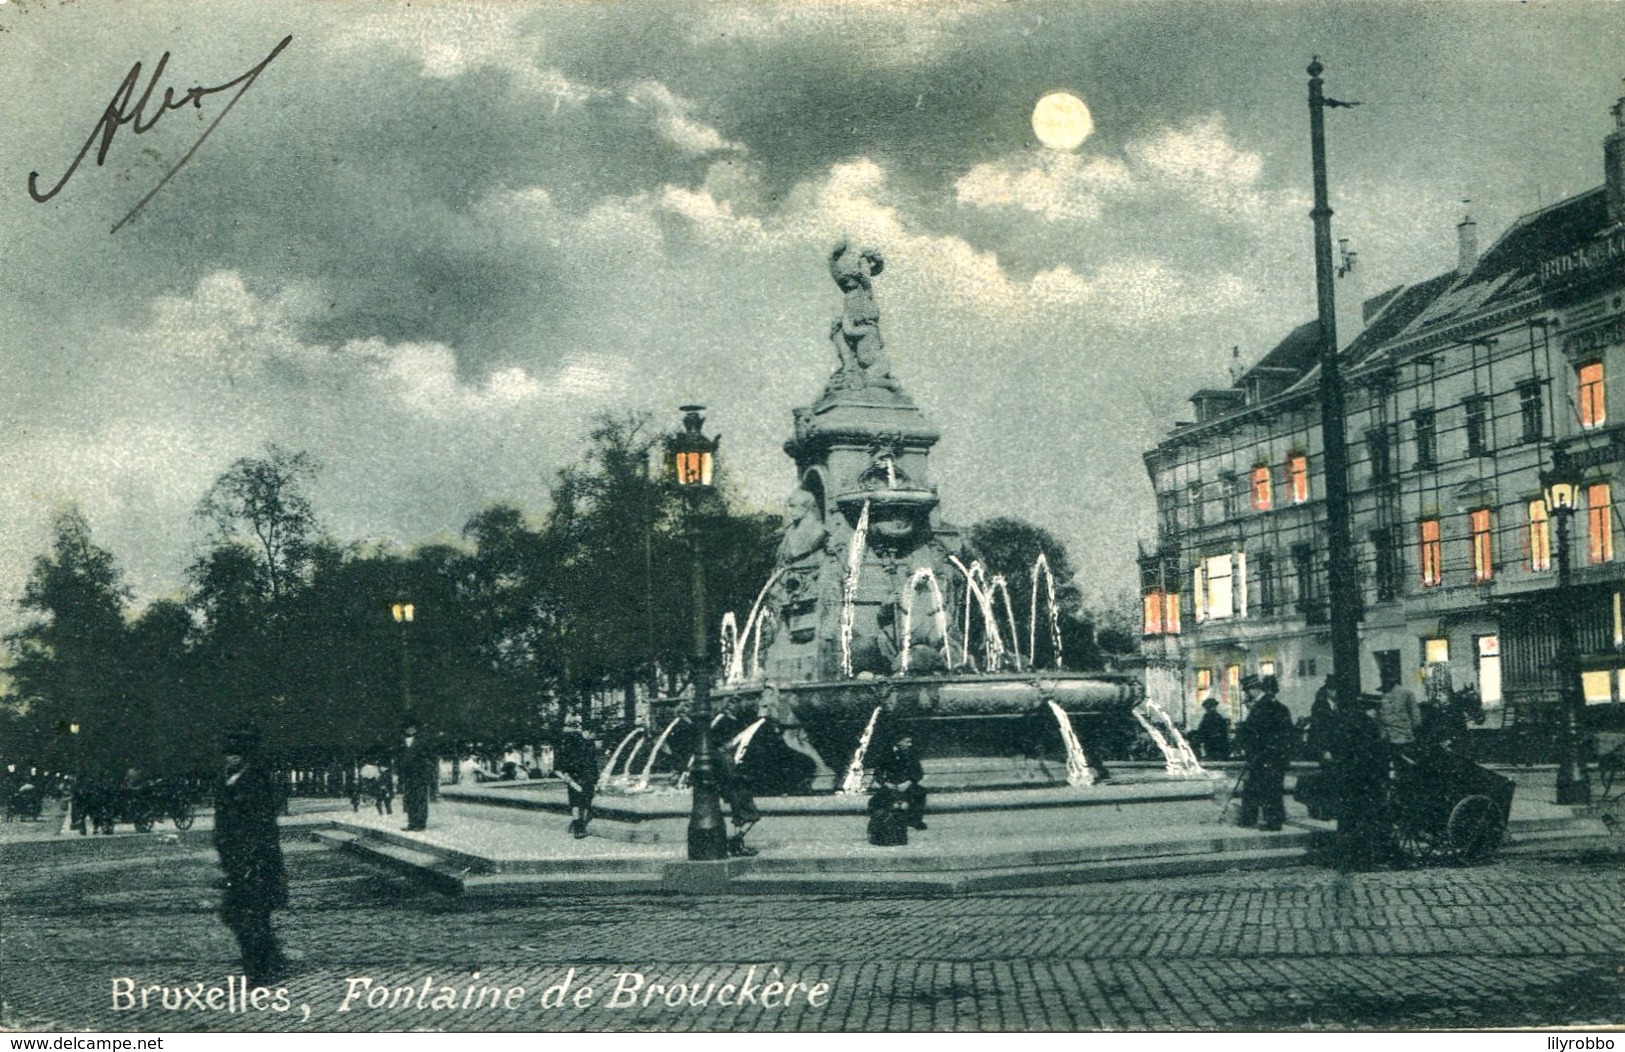 BELGIUM - Bruxelles Foutaine De Brouckere - Hold To Light Type Card - Undivided Rear VG Postmark Etc 1904 - Bruxelles La Nuit